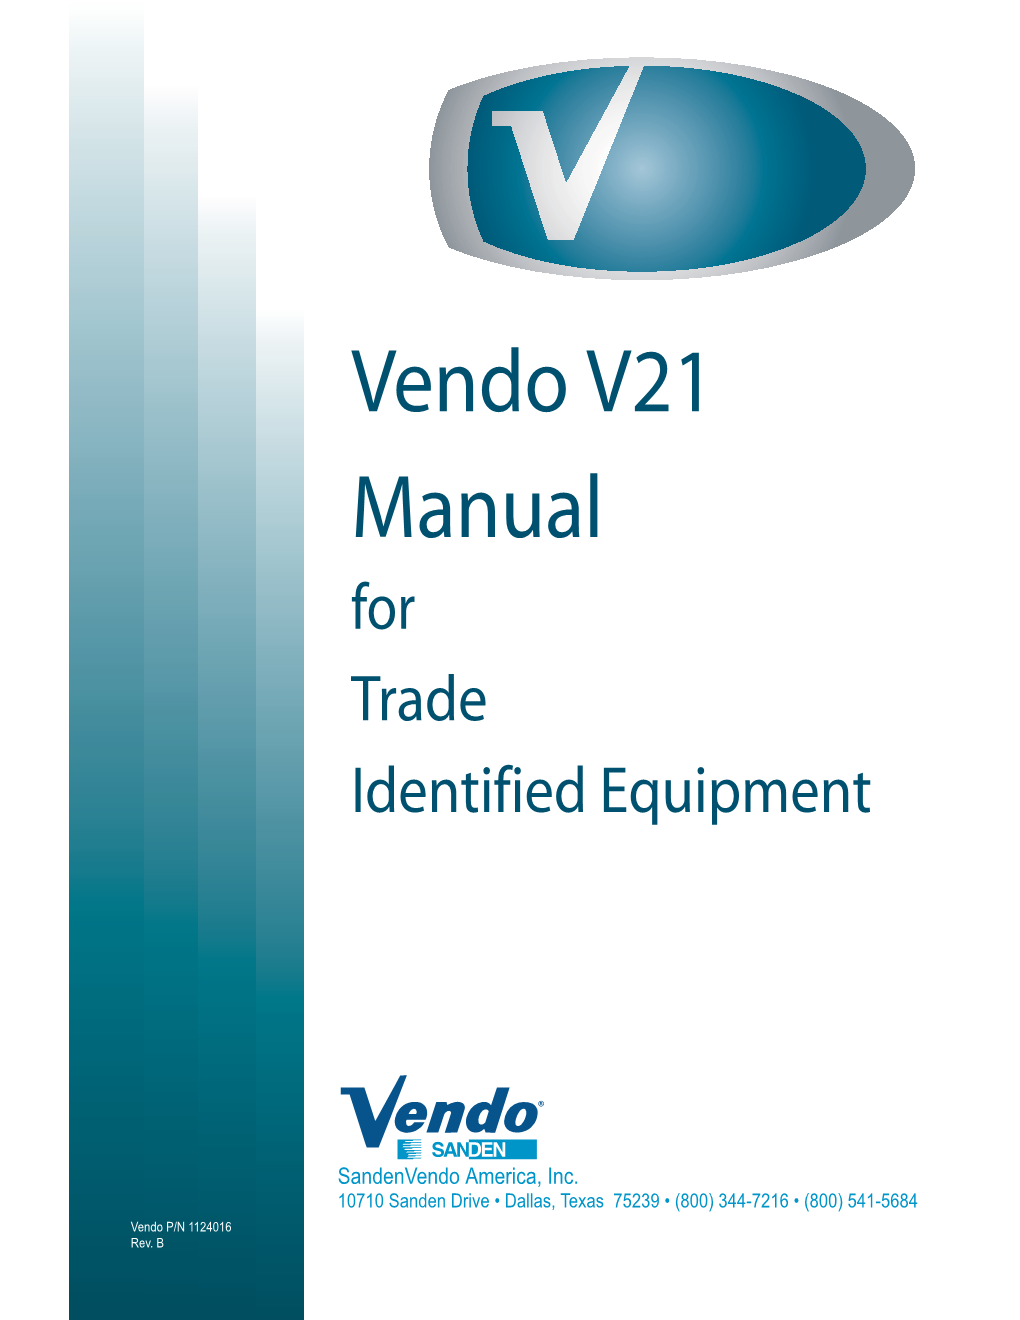 Vendo V21 Parts and Service Manual